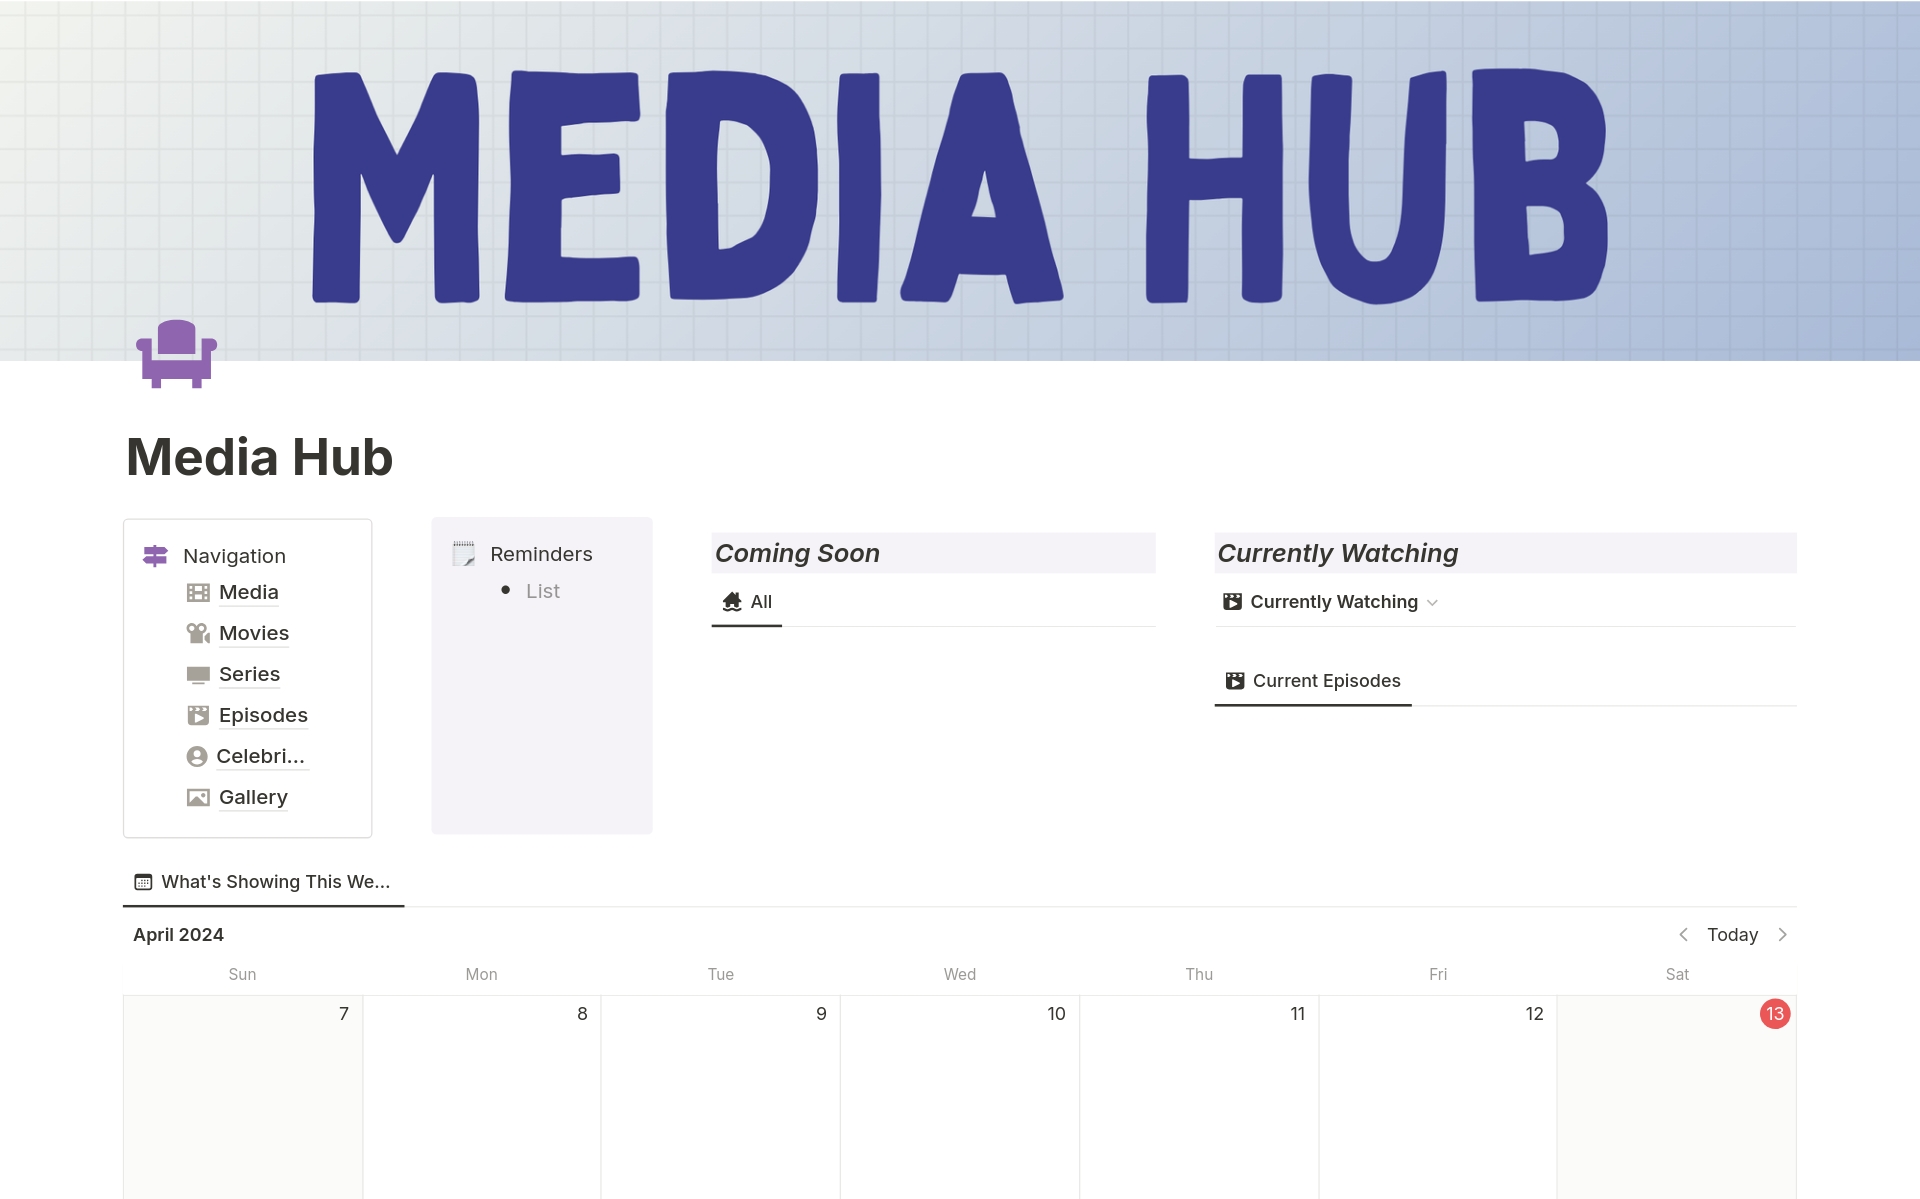 Aperçu du modèle de Media Hub